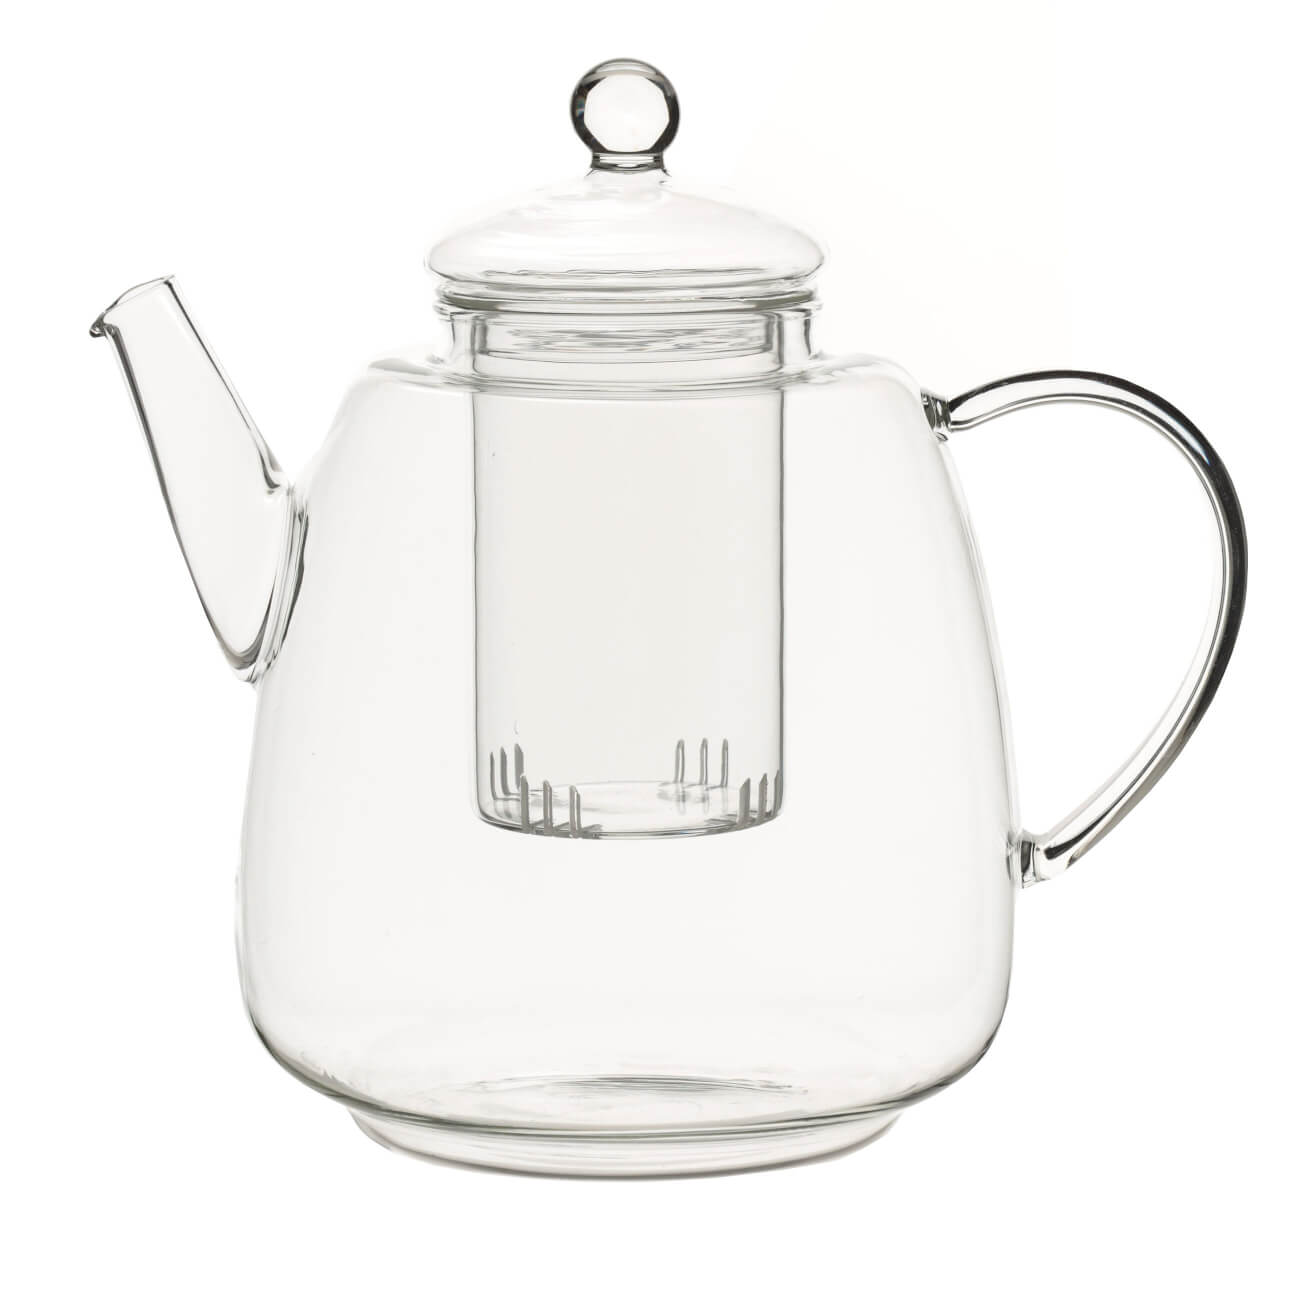 Чайник заварочный, 1,5 л, стекло Б, Clear kuchenland чайник заварочный 900 мл стекло б clear